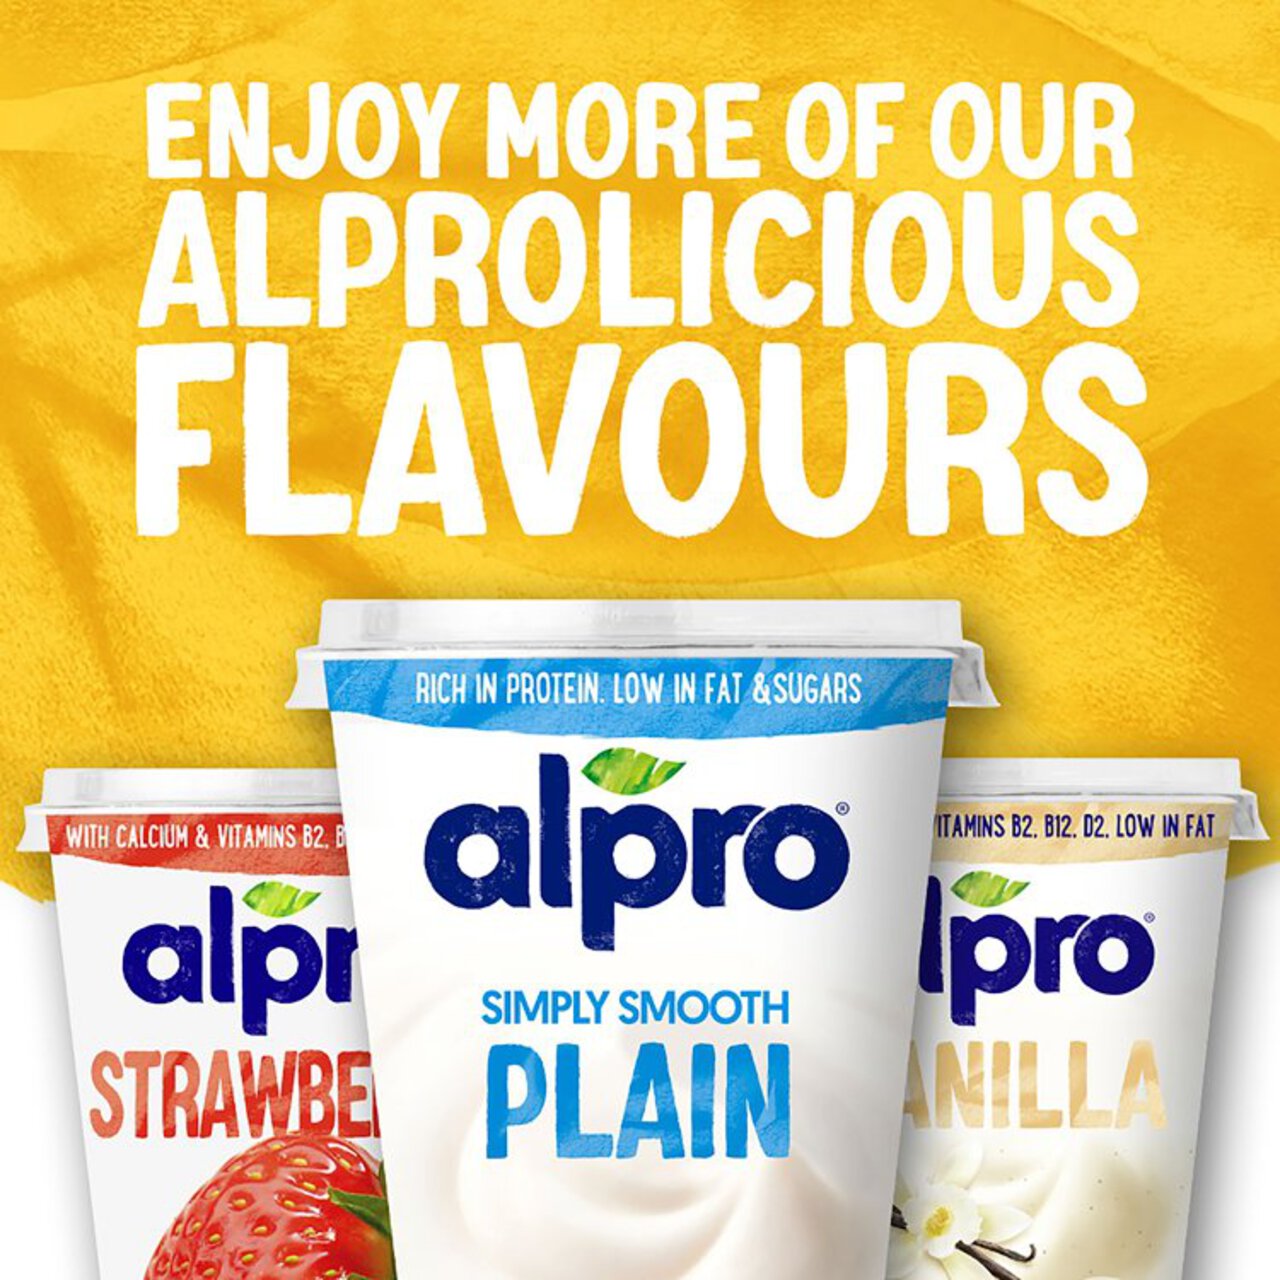 Alpro Peach & Pineapple-Passion fruit Yoghurt Alternative 4 x 125g